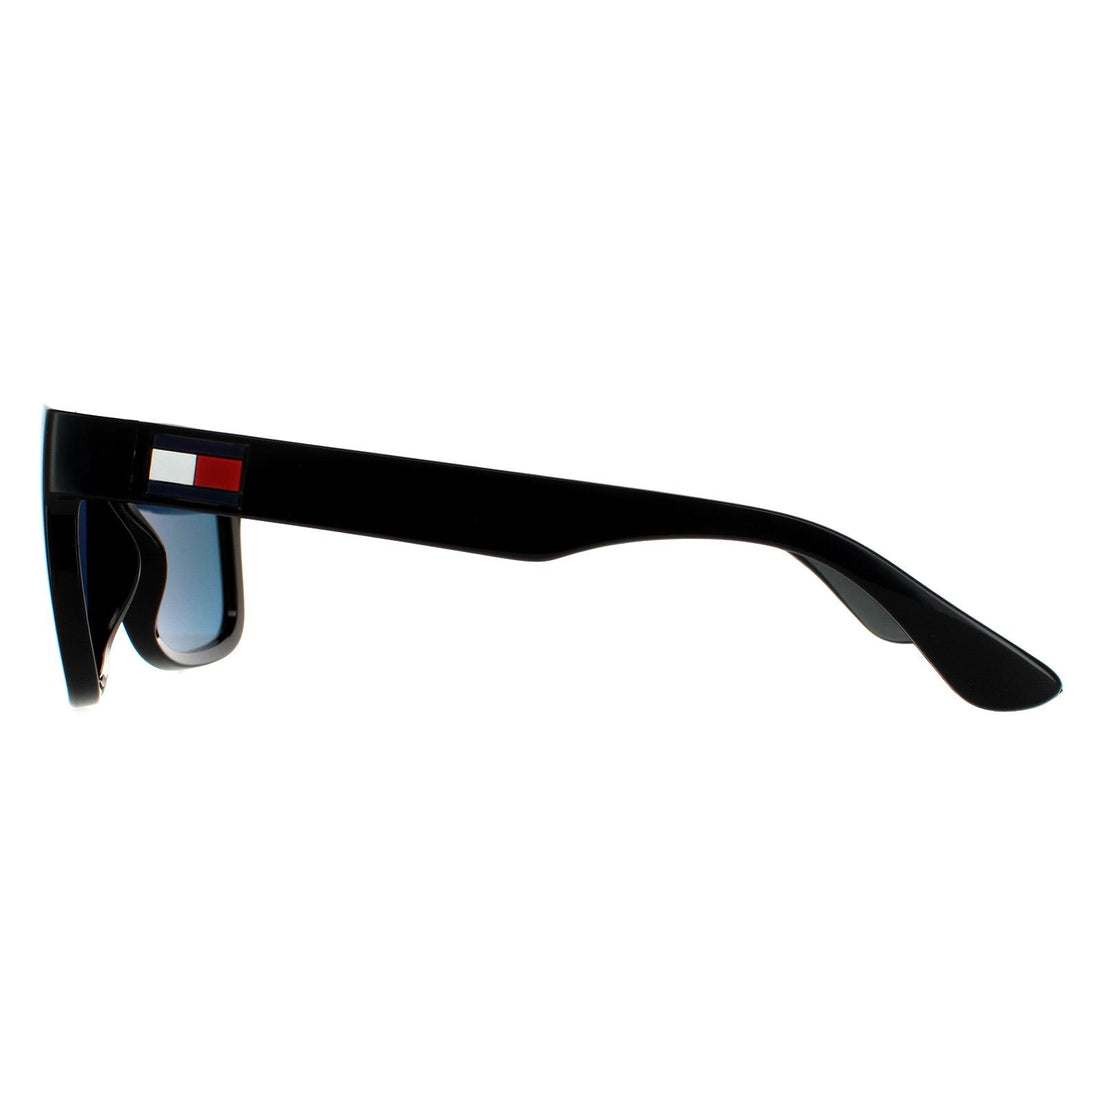 Tommy Hilfiger Sunglasses TH 1556/S 807 UZ Black Red Mirror